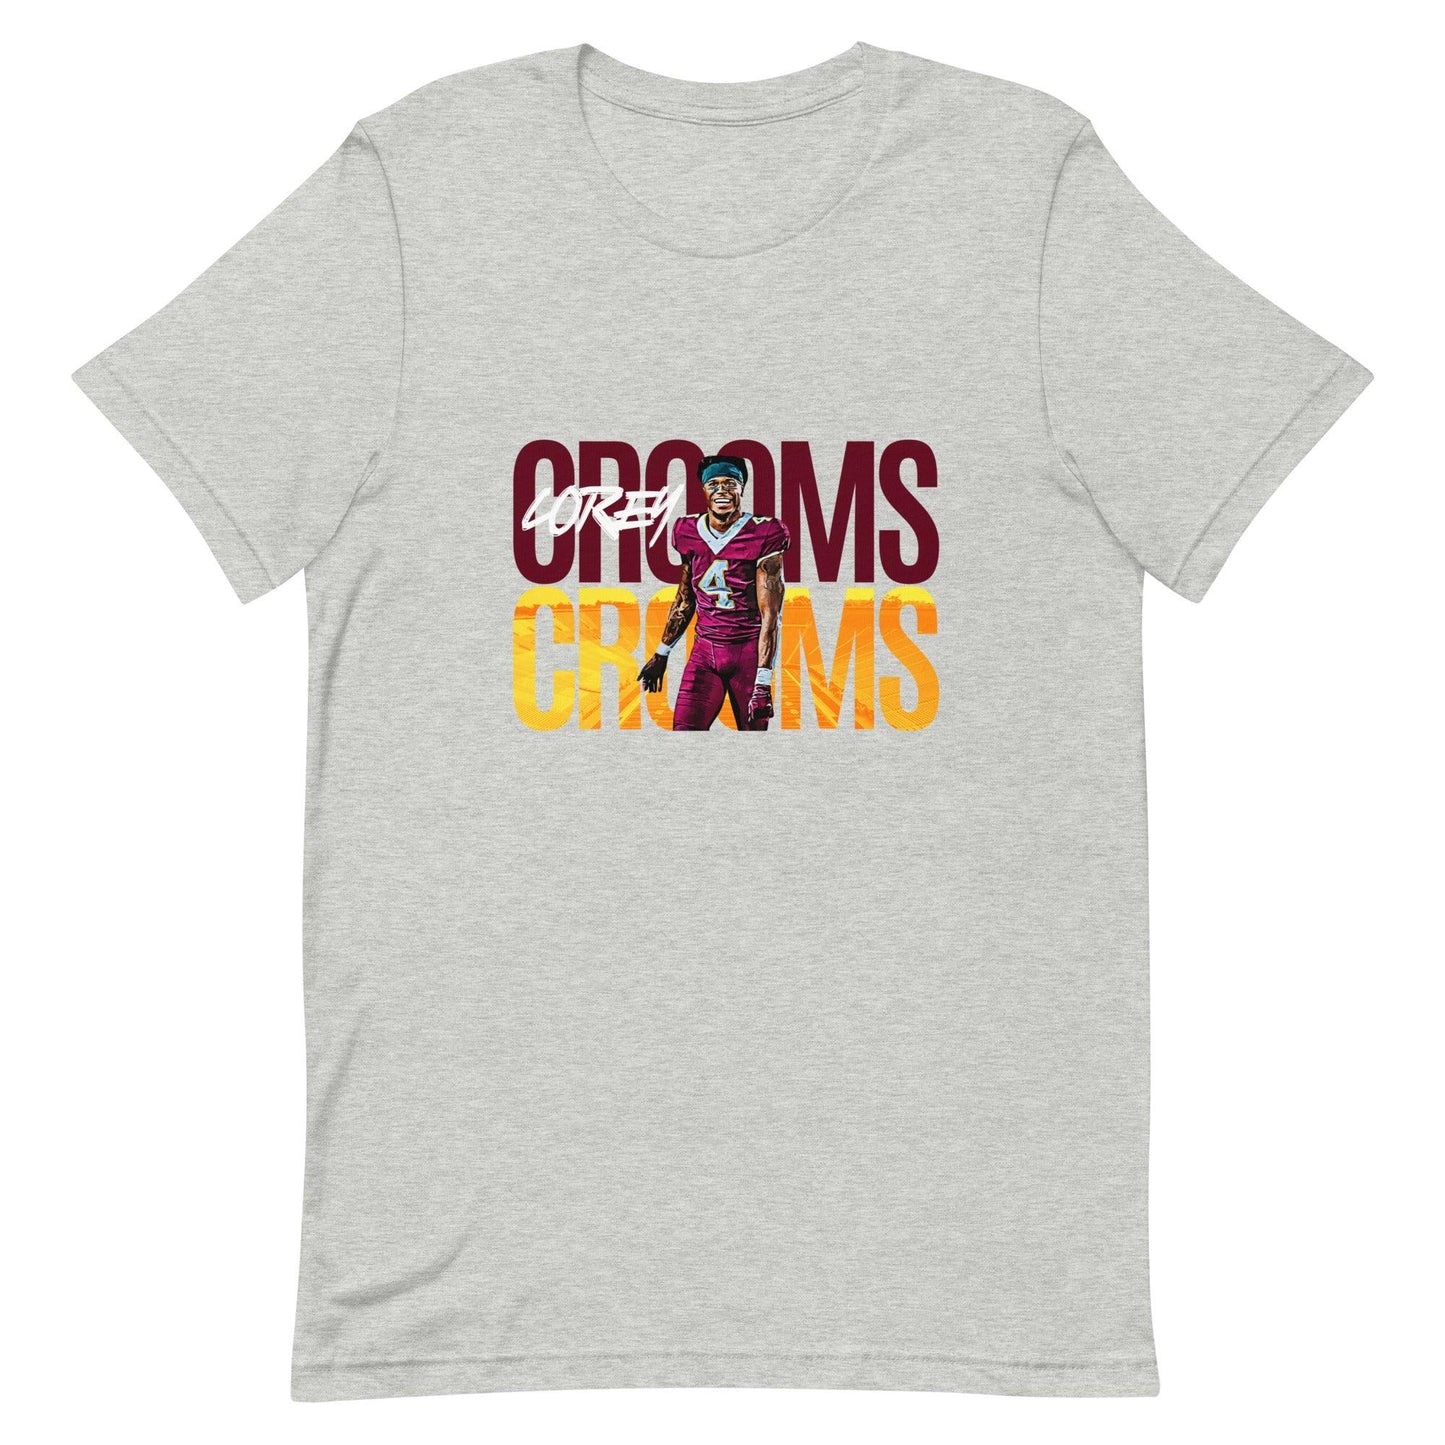 Corey Crooms "Gameday" t-shirt - Fan Arch